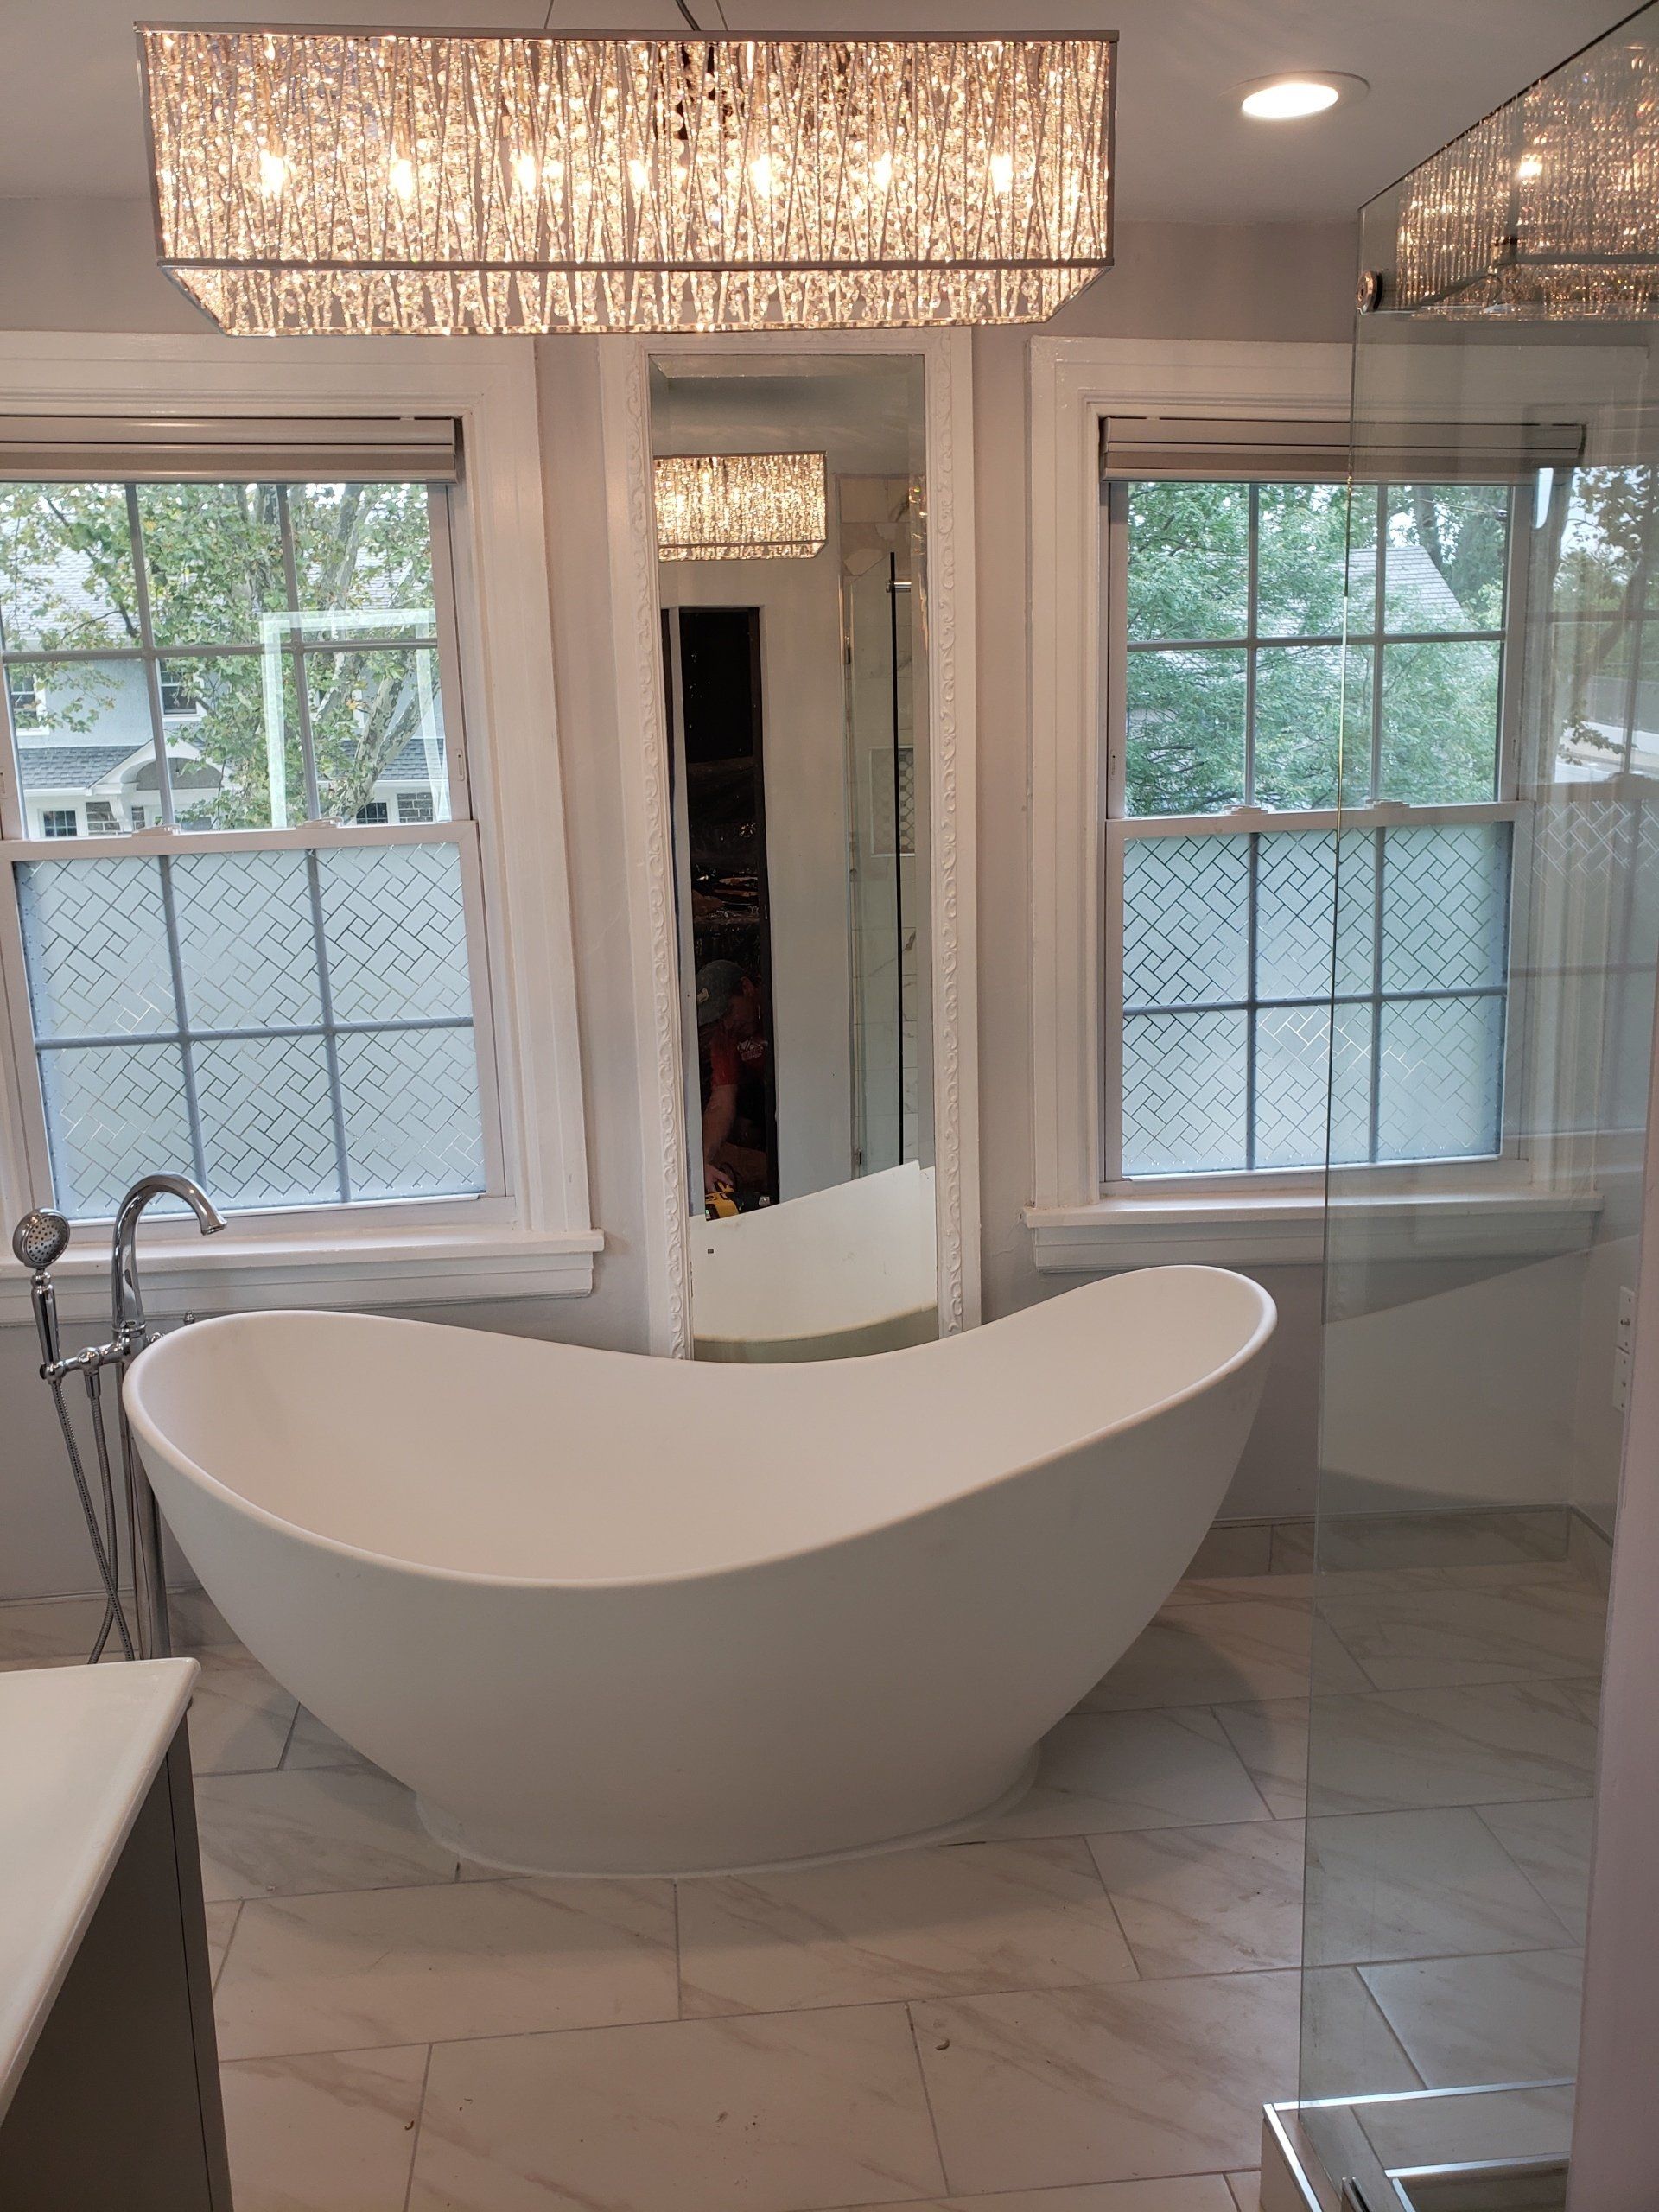 kidney shaped freestanding soaking tub and chandelier light fixture in master bathroom remodel in jenkintown